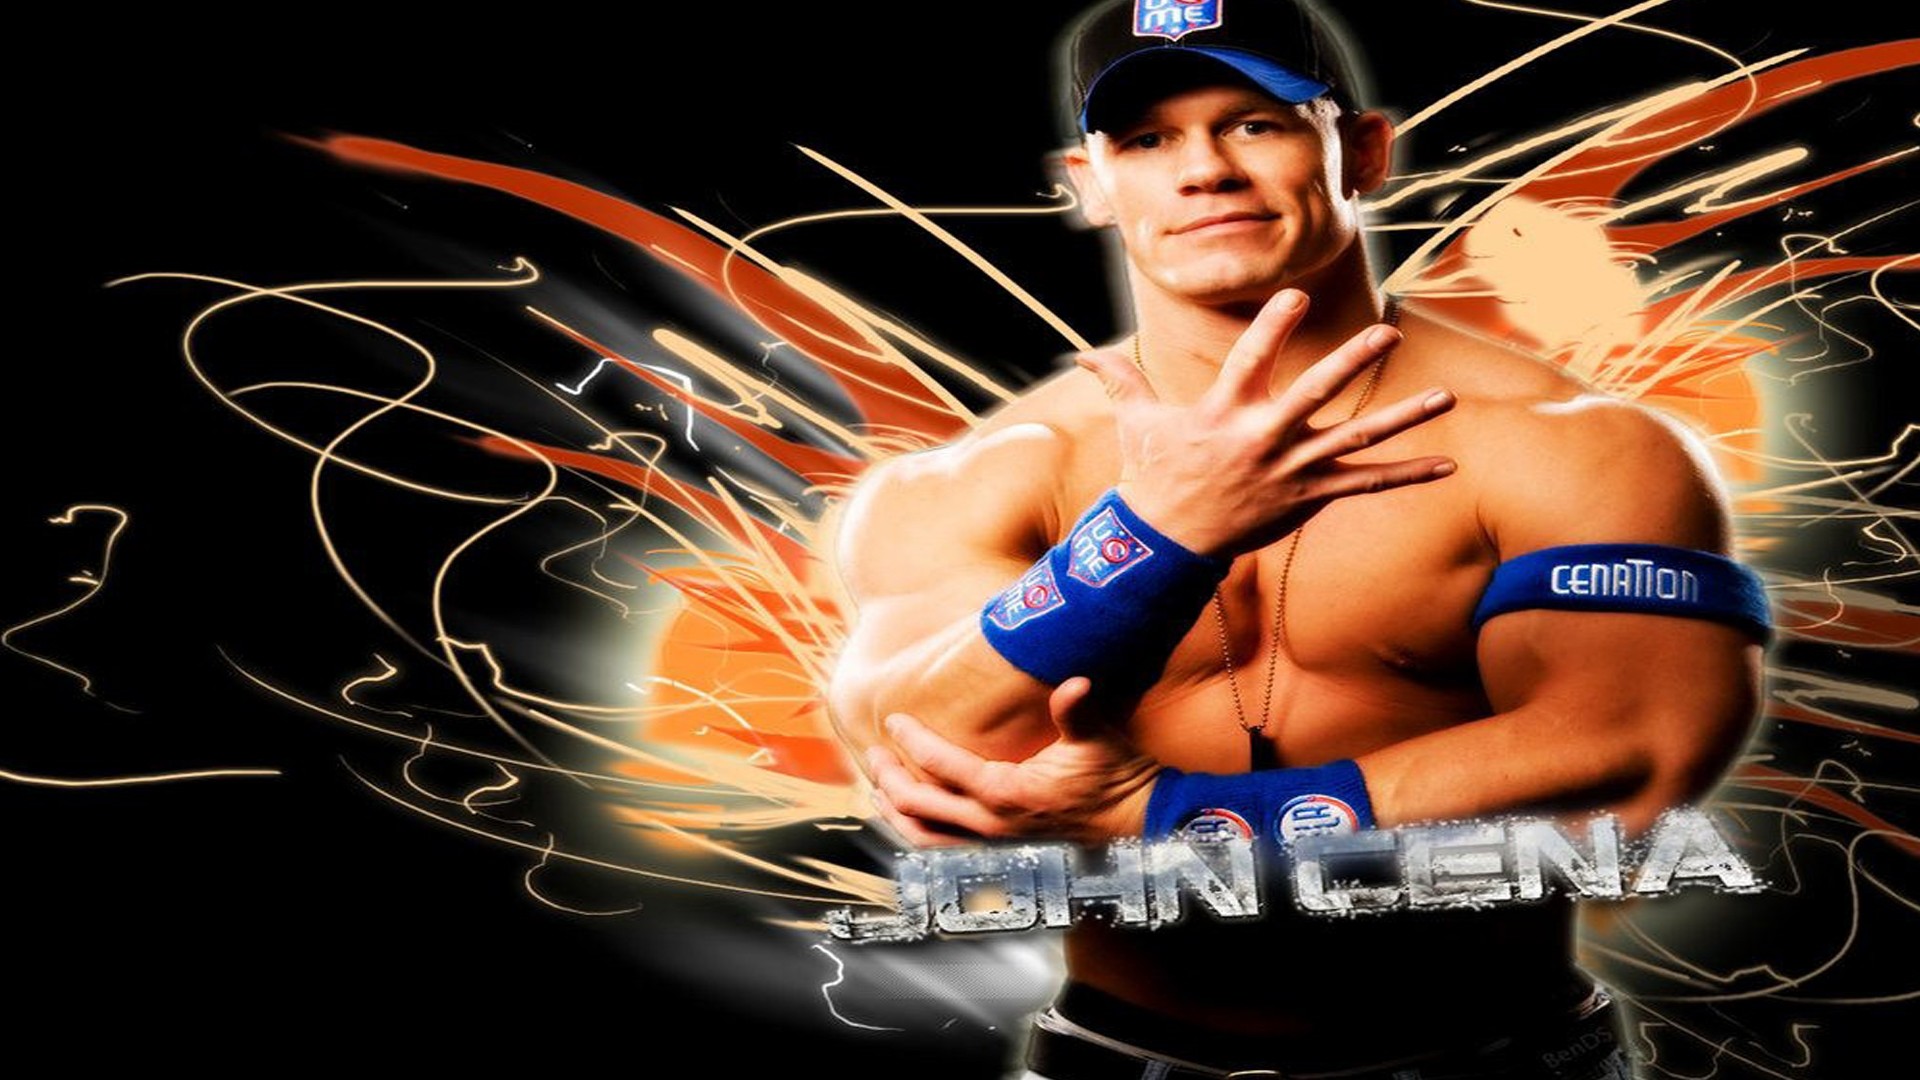 John Cena Body Wallpaper Image